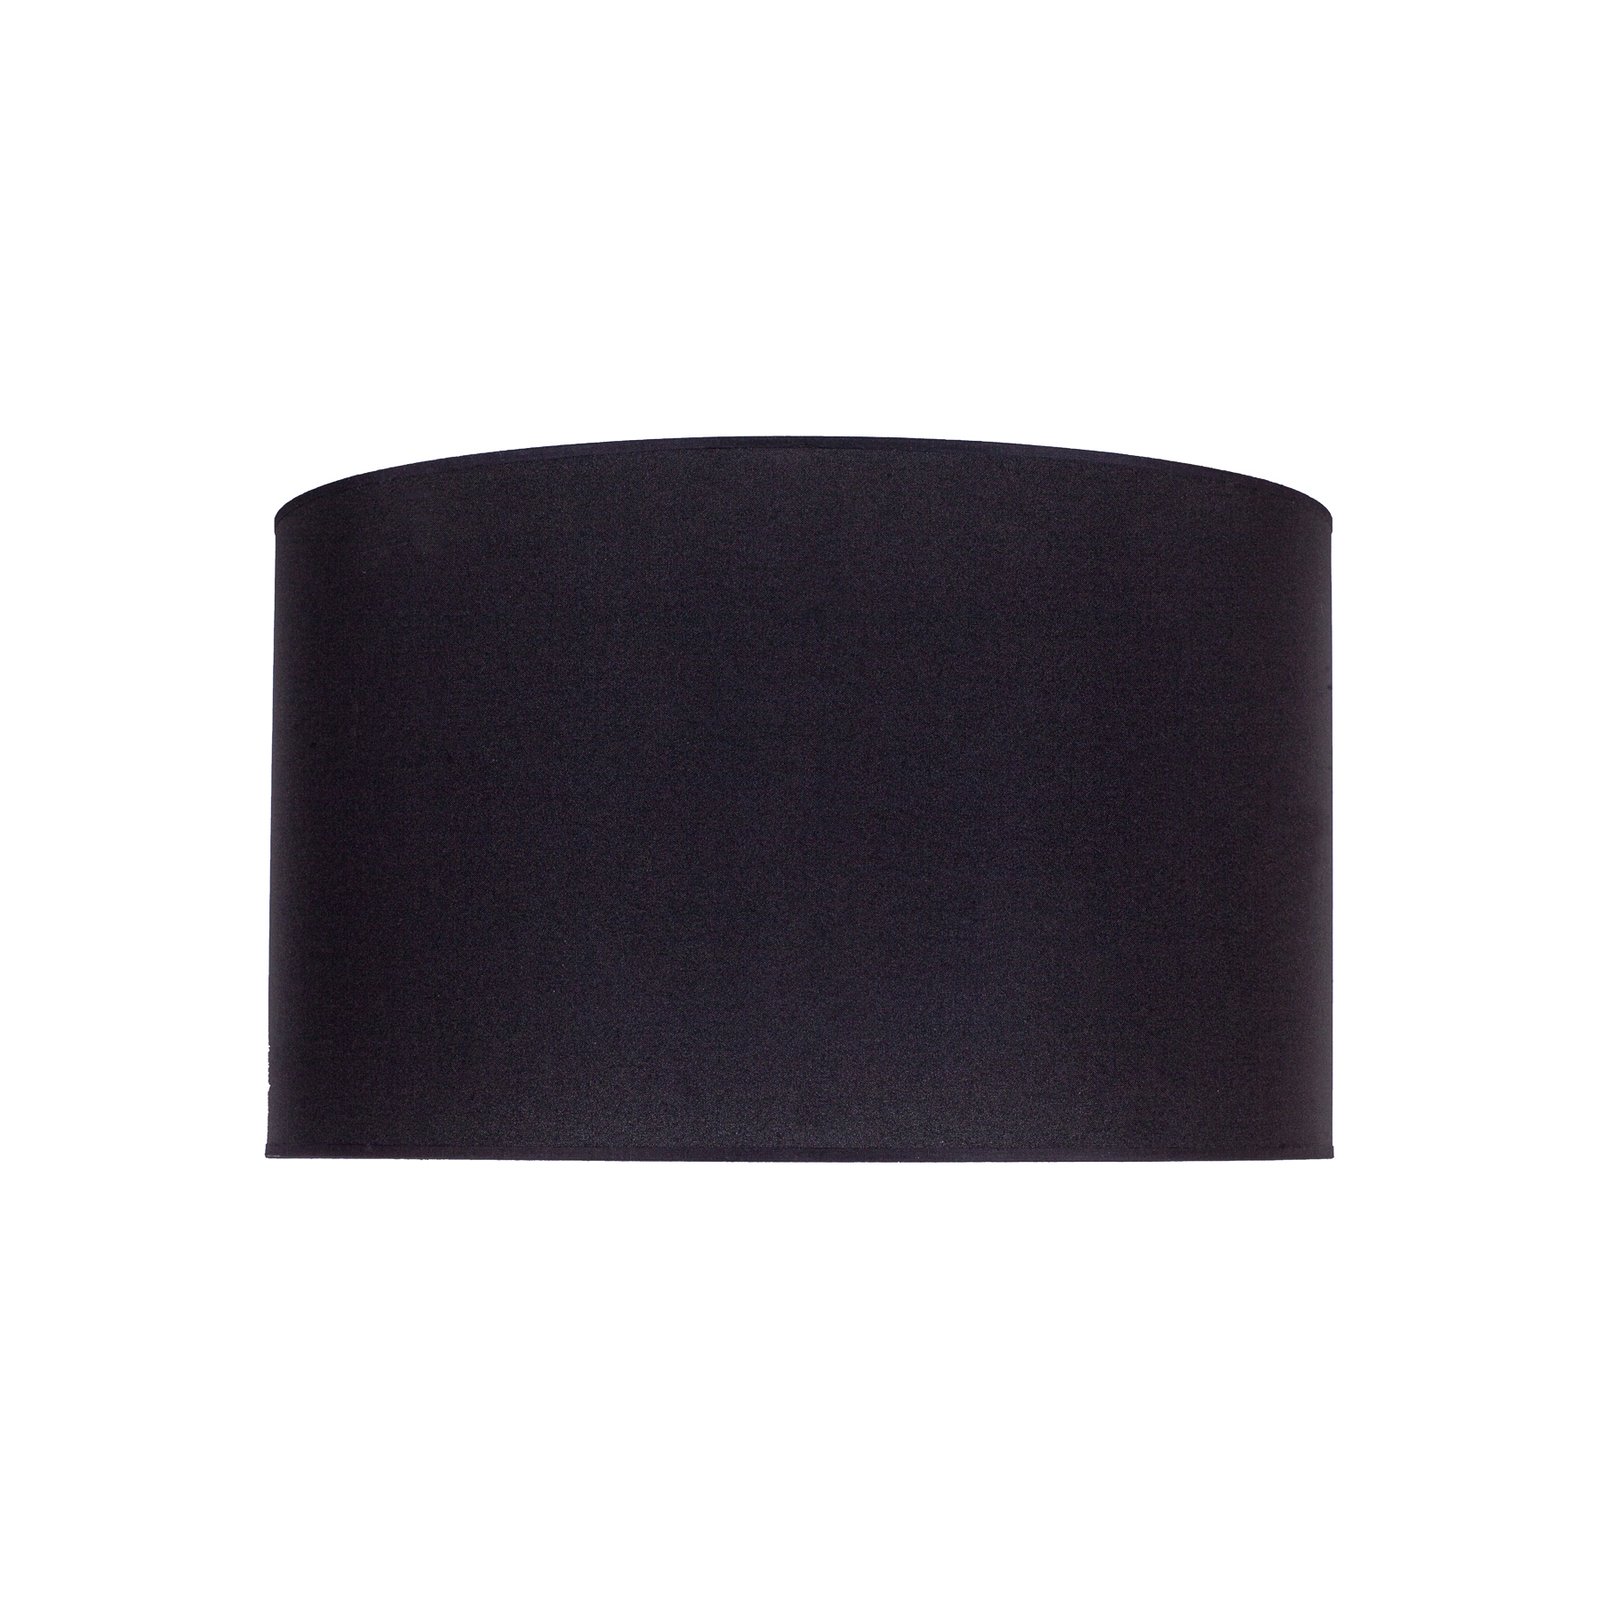 Roller lampshade Ø 50 cm, black